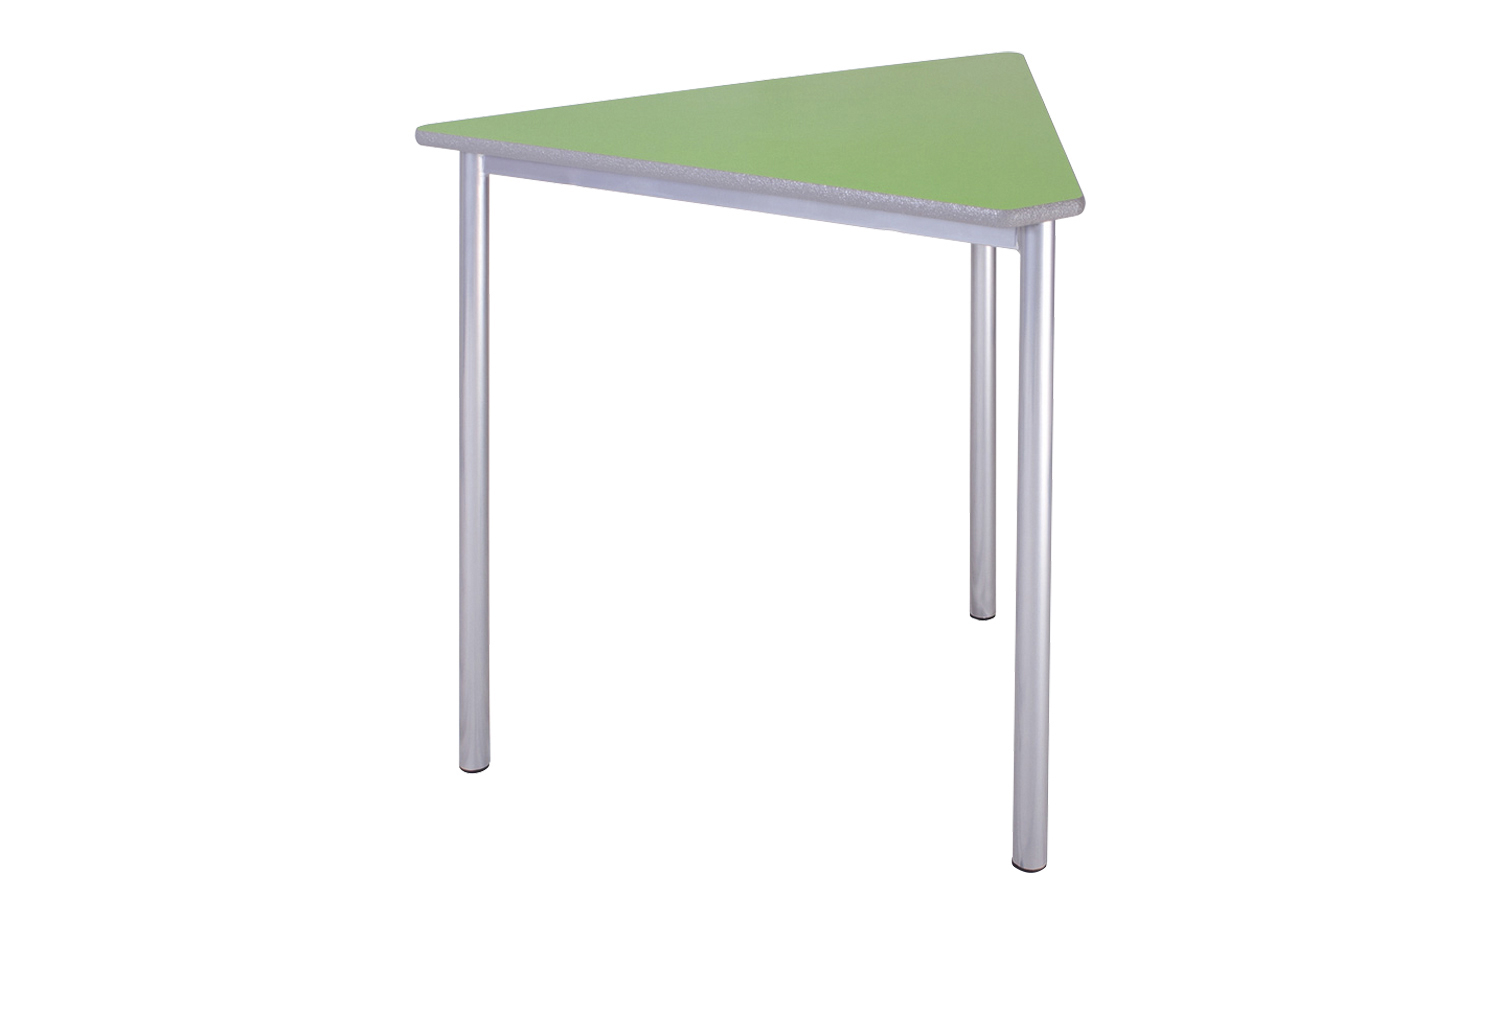 Qty 4 - Educate Premium Wedge Classroom Tables 14+ Years (PU Edge), Black Frame, Light Grey Top